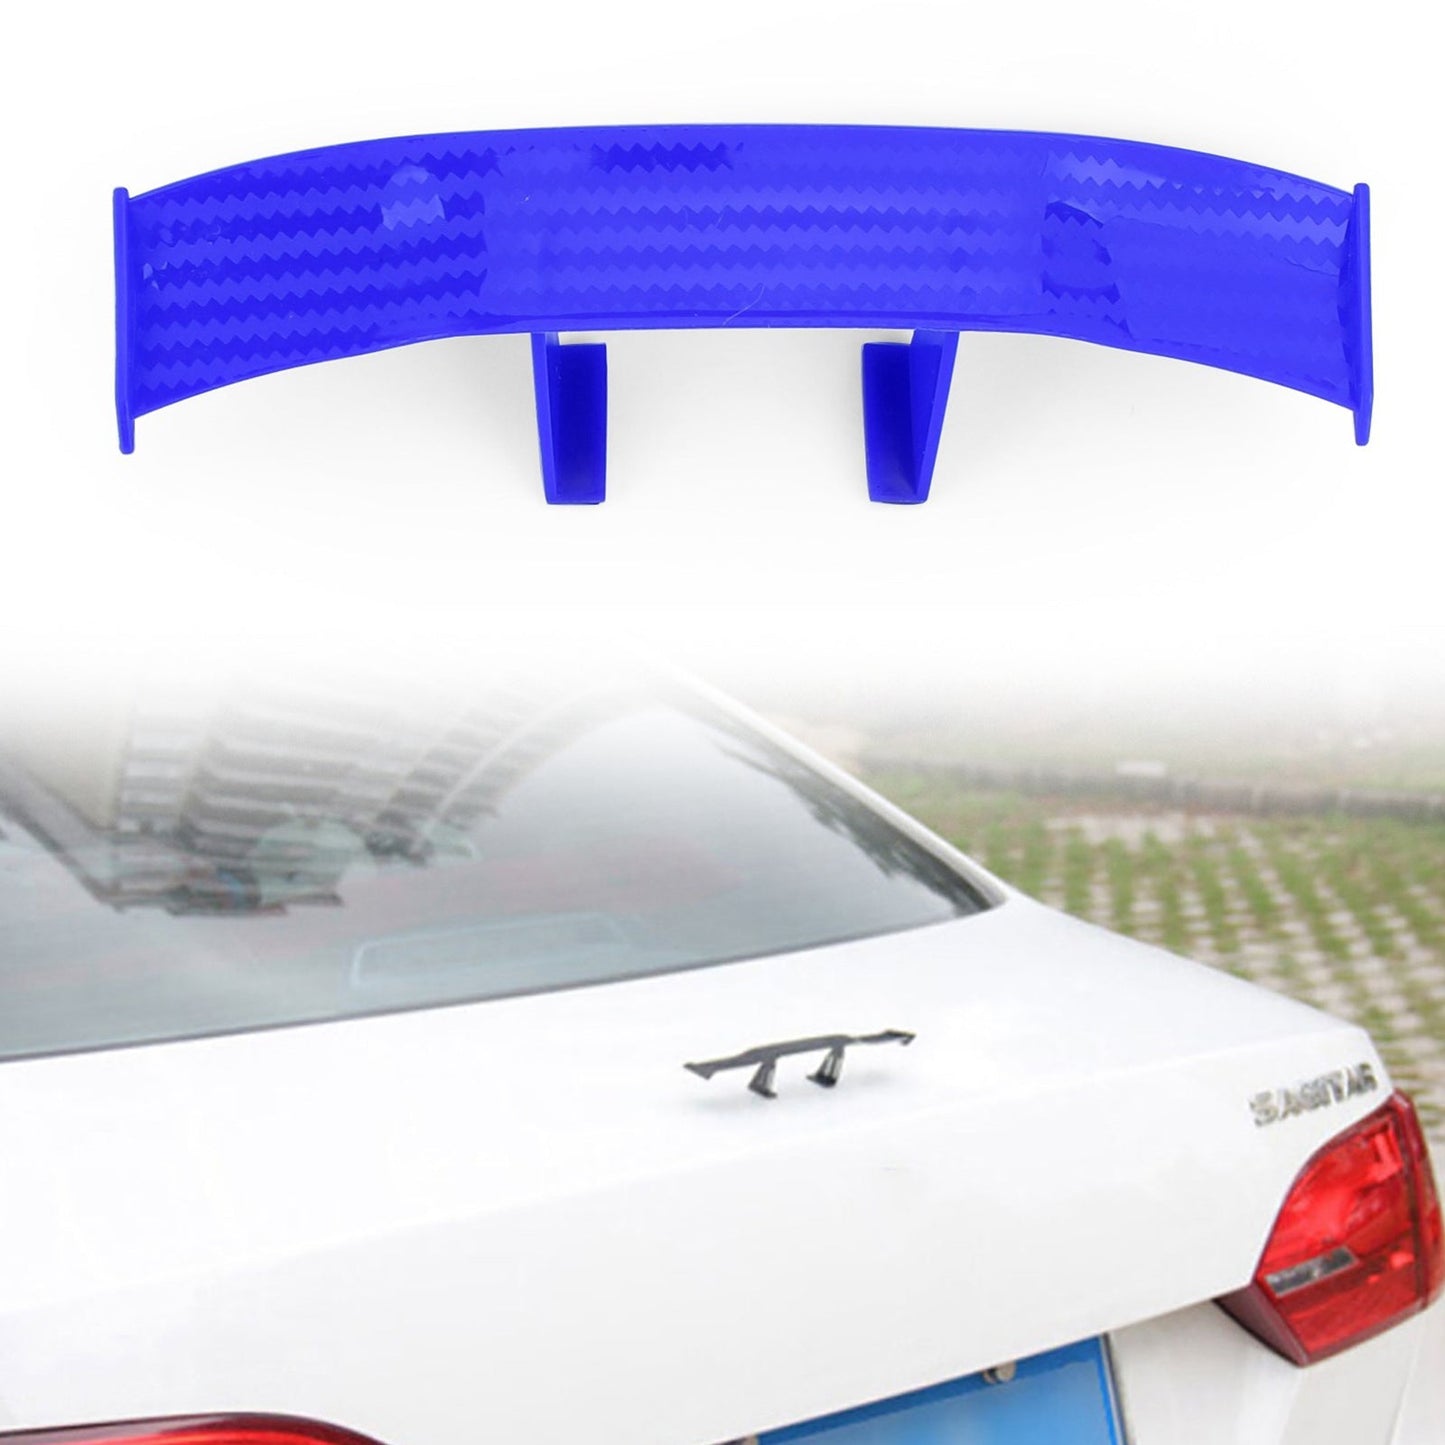 Universal Mini Spoiler Car Auto Tail Decoration Spoiler Wing Carbon Fiber